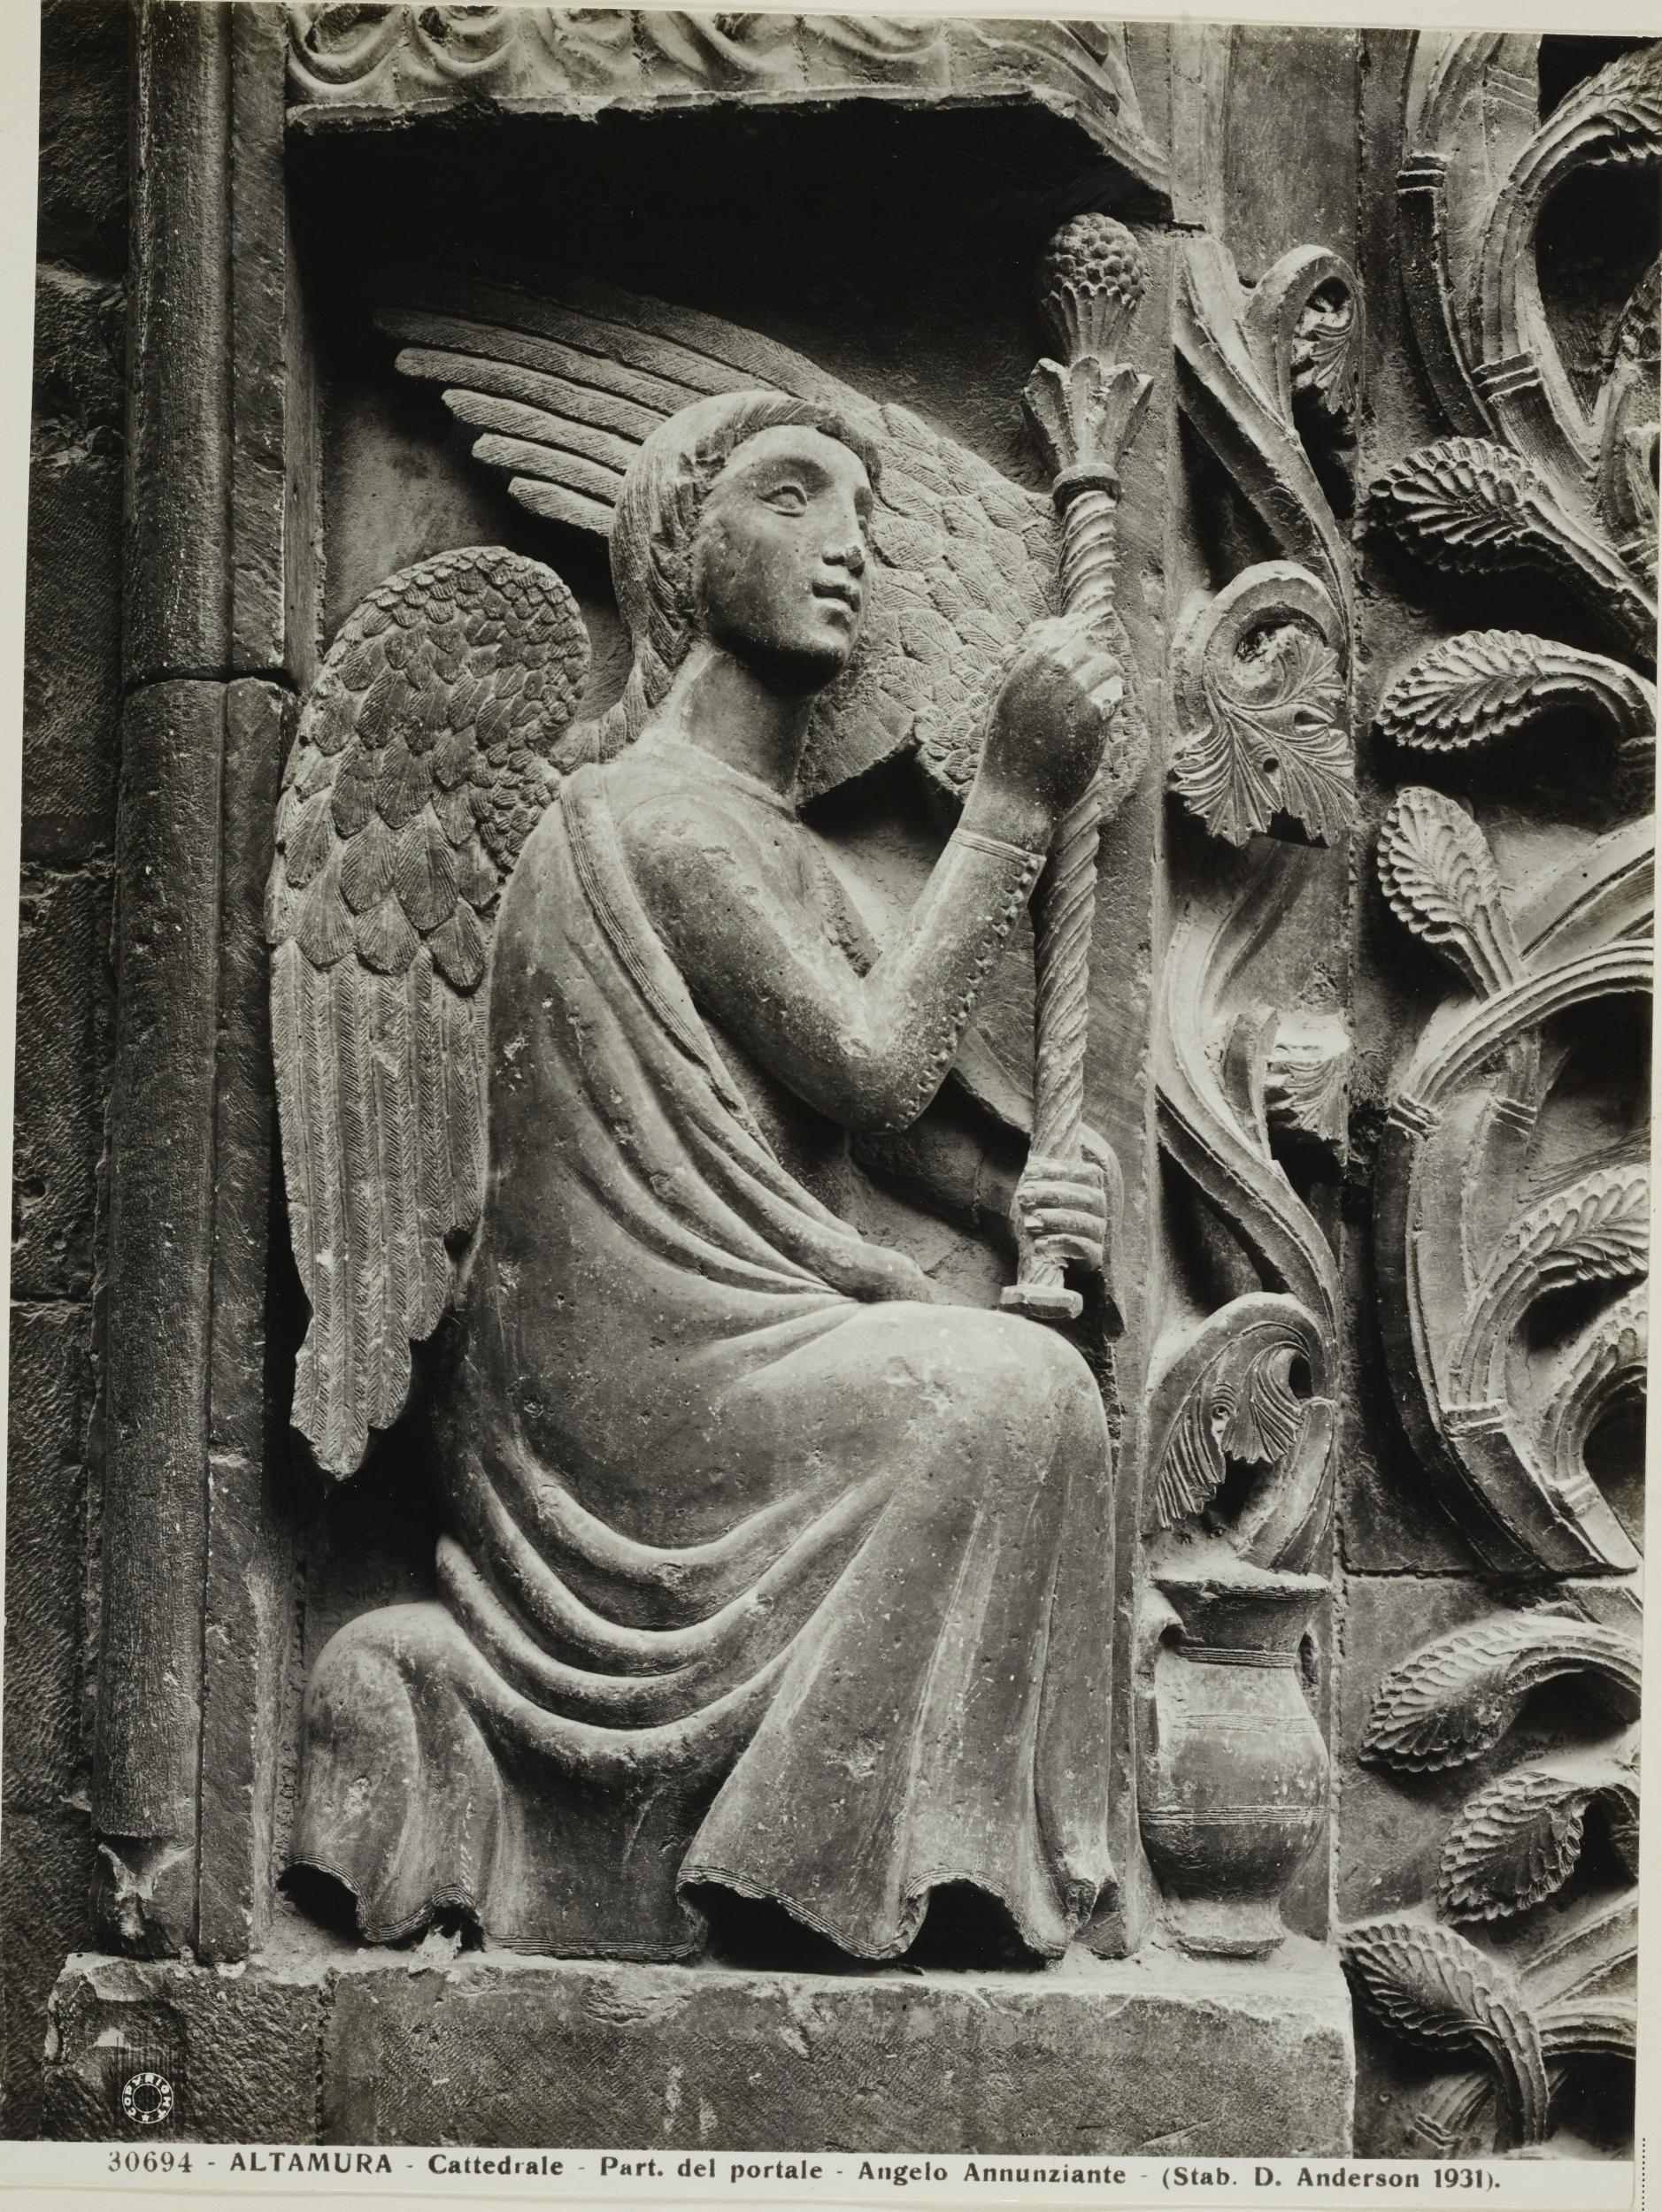 Domenico Anderson, Altamura - Cattedrale di S. Maria Assunta, l'arcangelo Gabriele in bassorilievo lapideo, 1951-2000, gelatina ai sali d'argento/carta, MPI130830